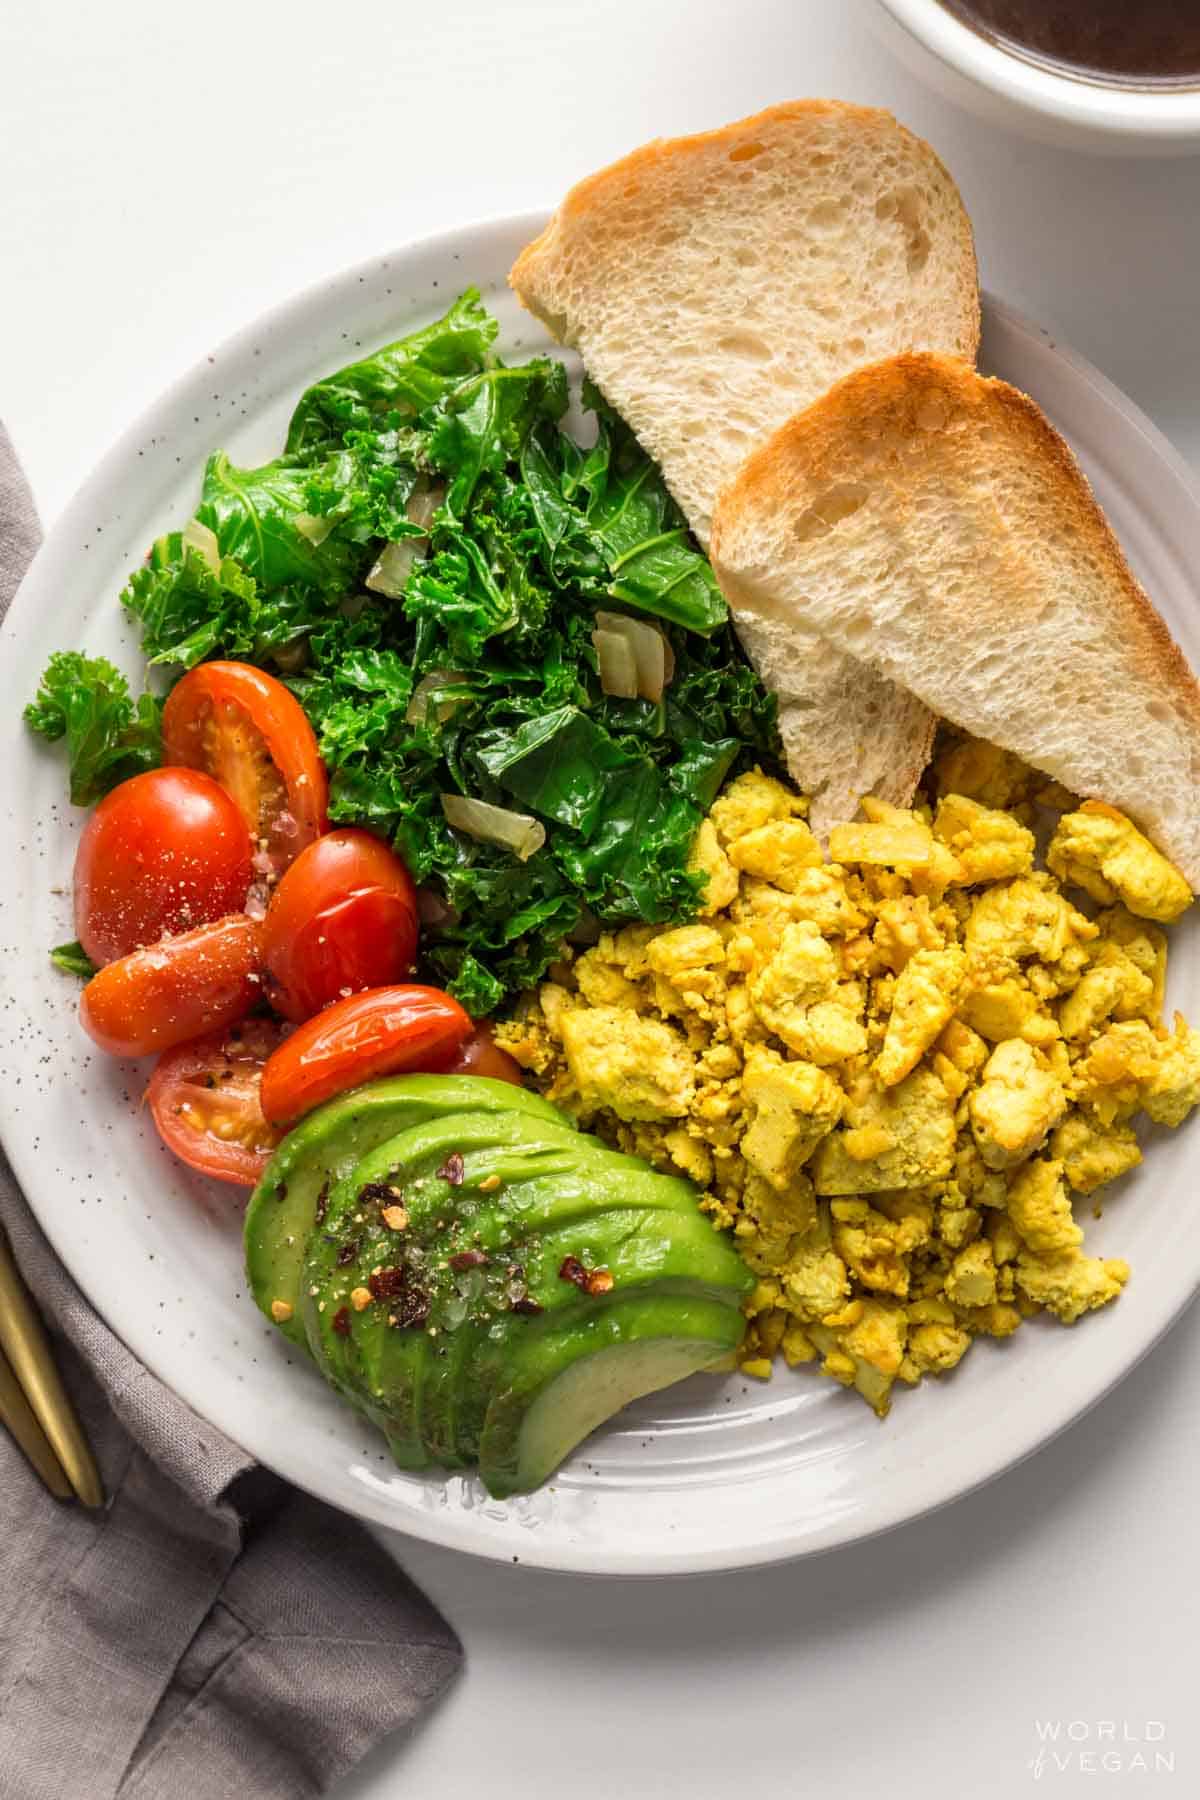 Vegan breakfast plate with tofu scramble, toast, avocado, tomatoes, and greens.